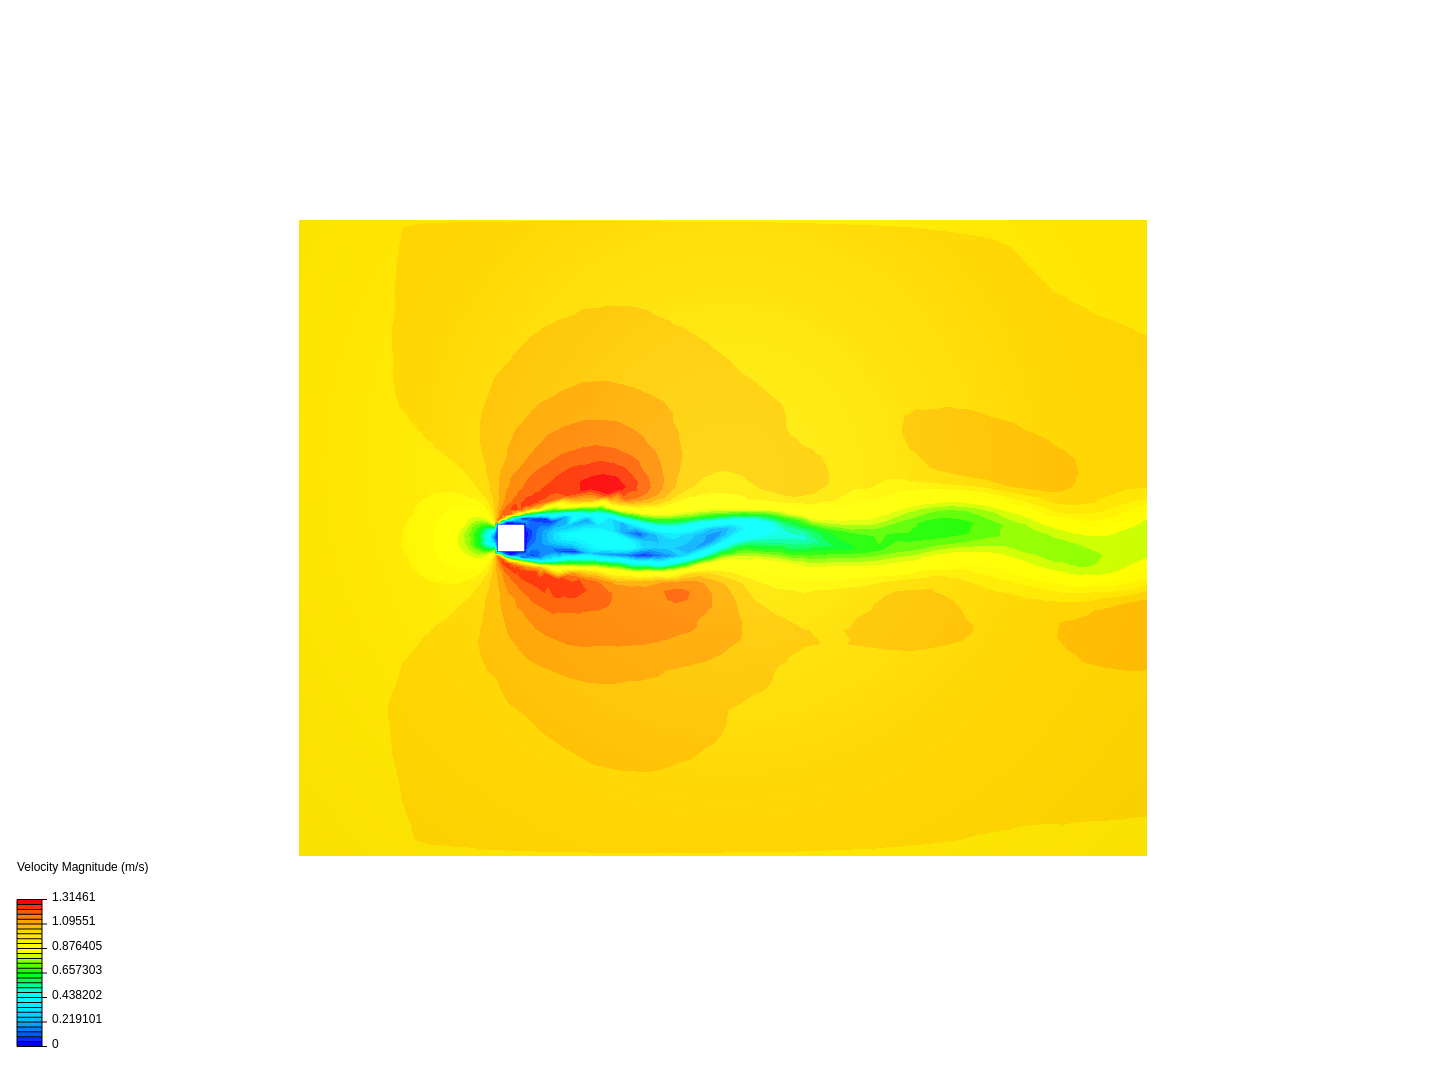 Flow past square cylinder image